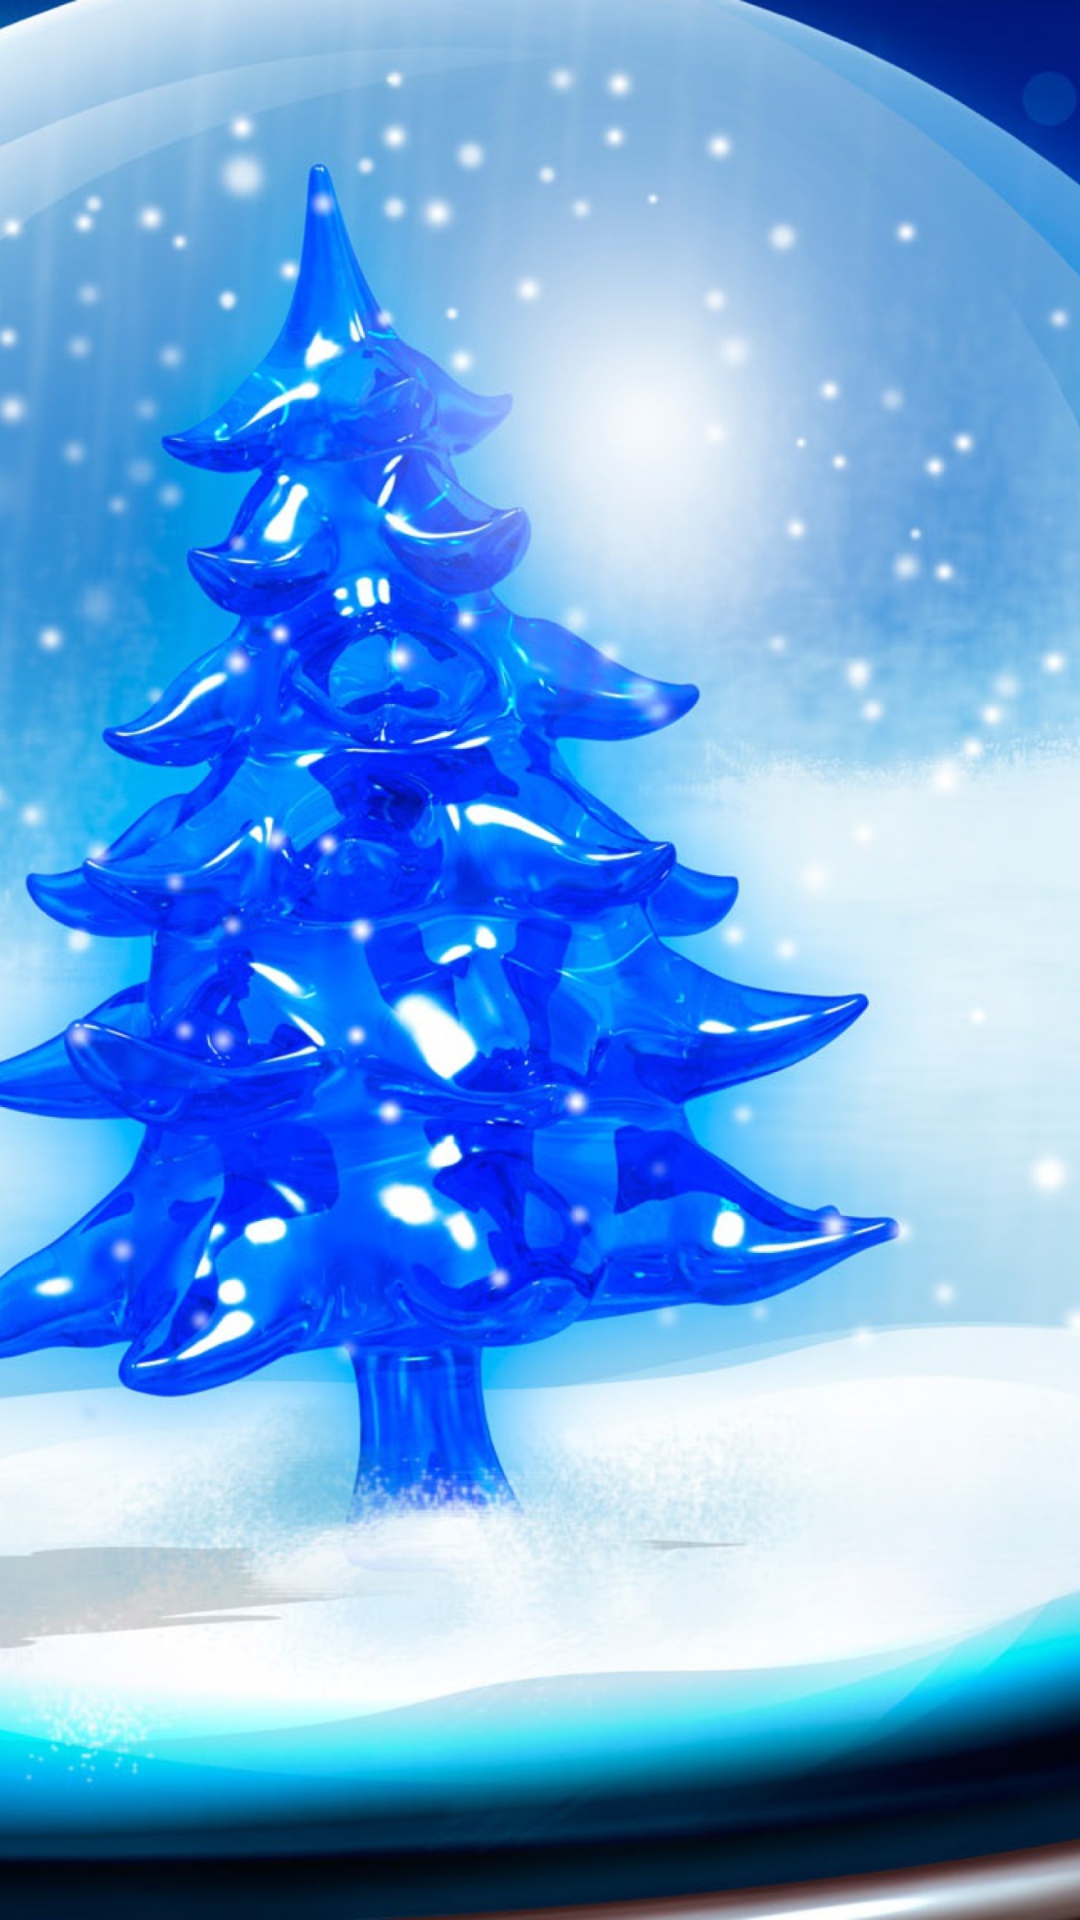 Snowy Christmas Tree wallpaper 1080x1920